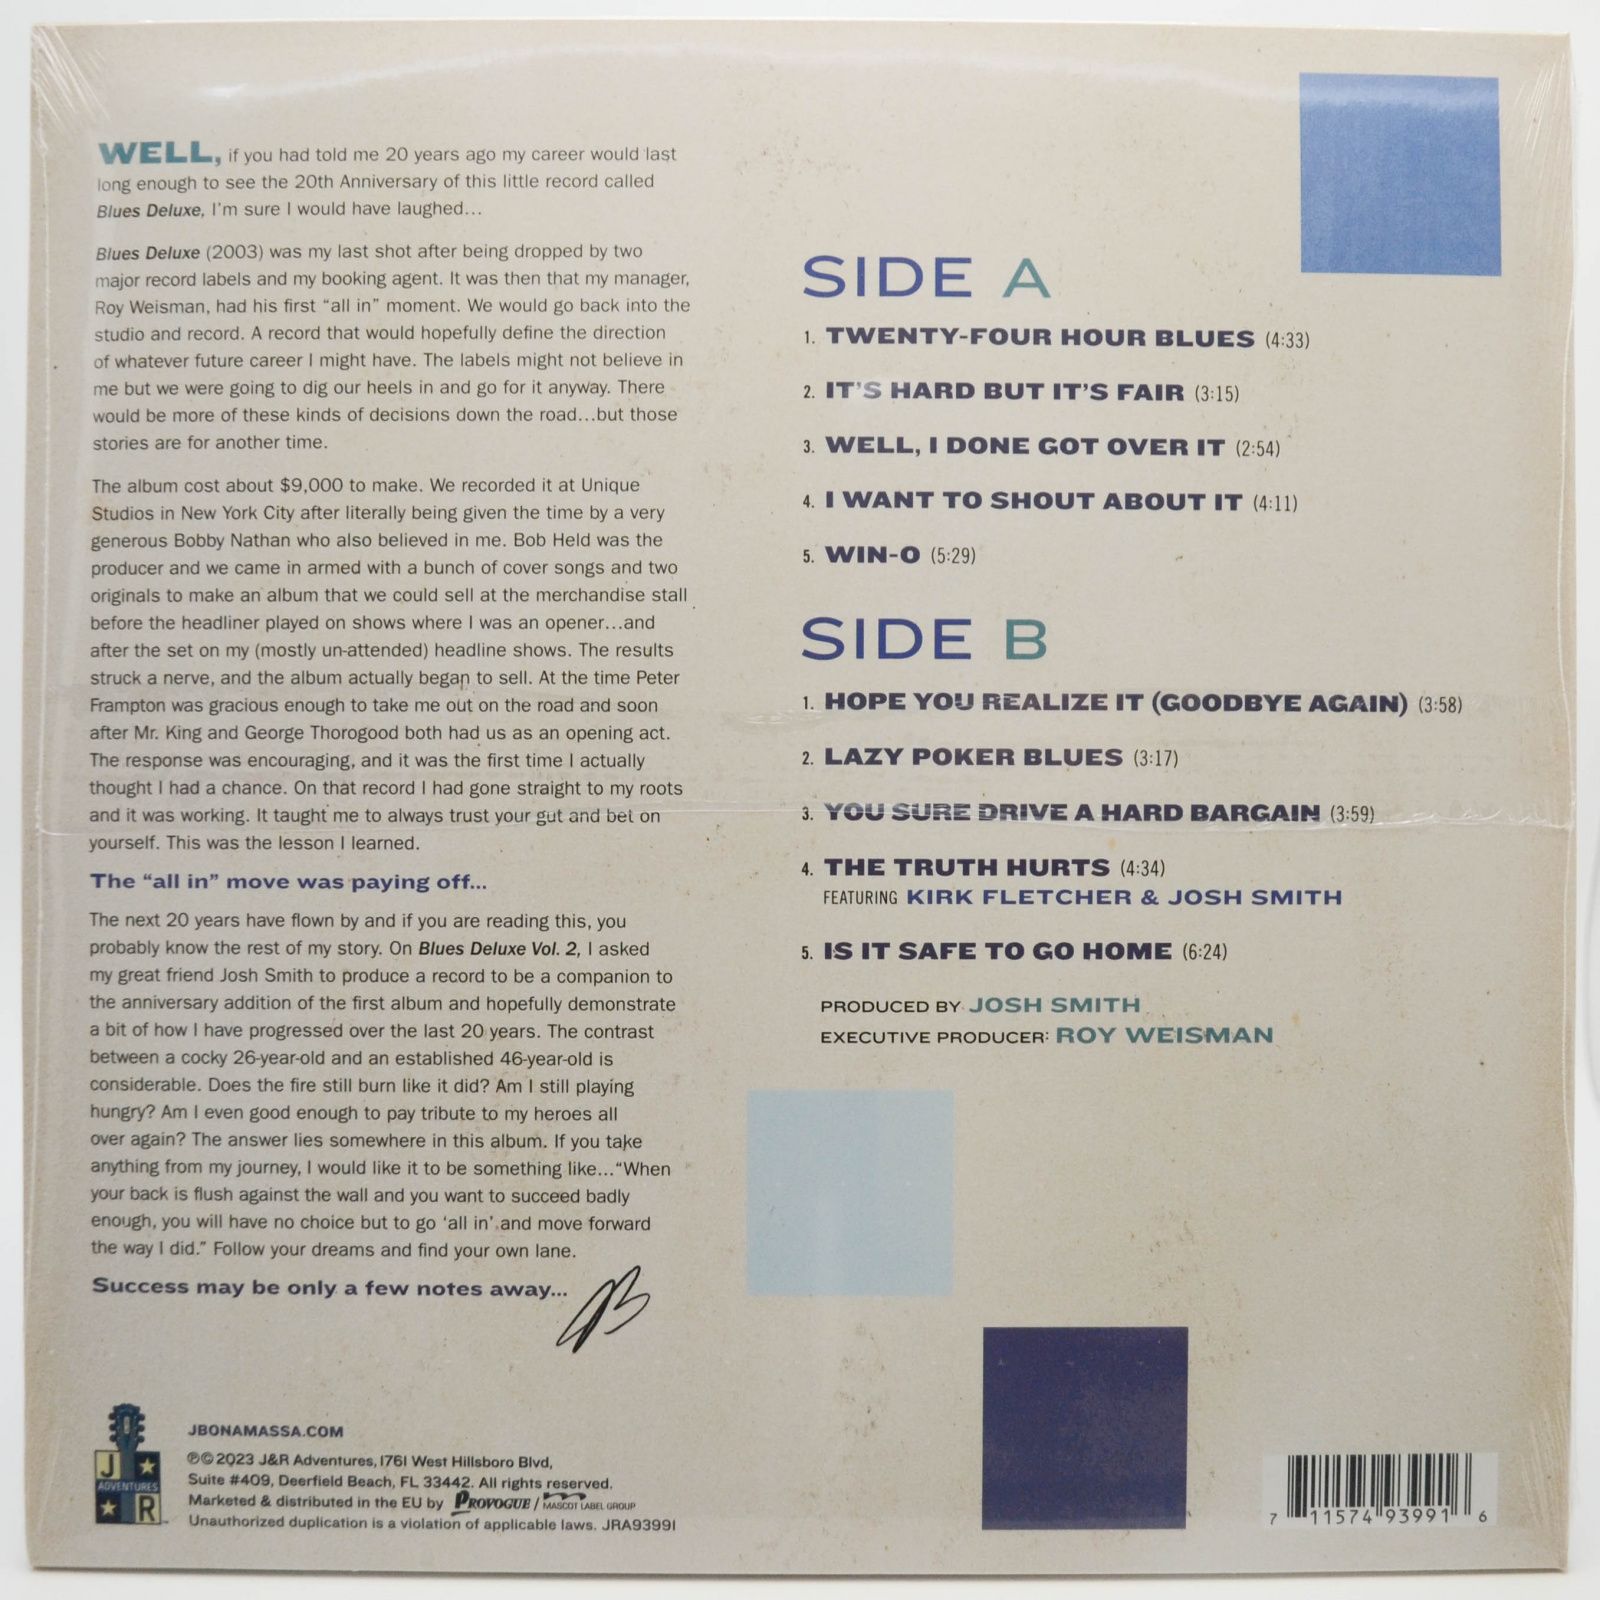 Joe Bonamassa — Blues Deluxe Vol. 2, 2023